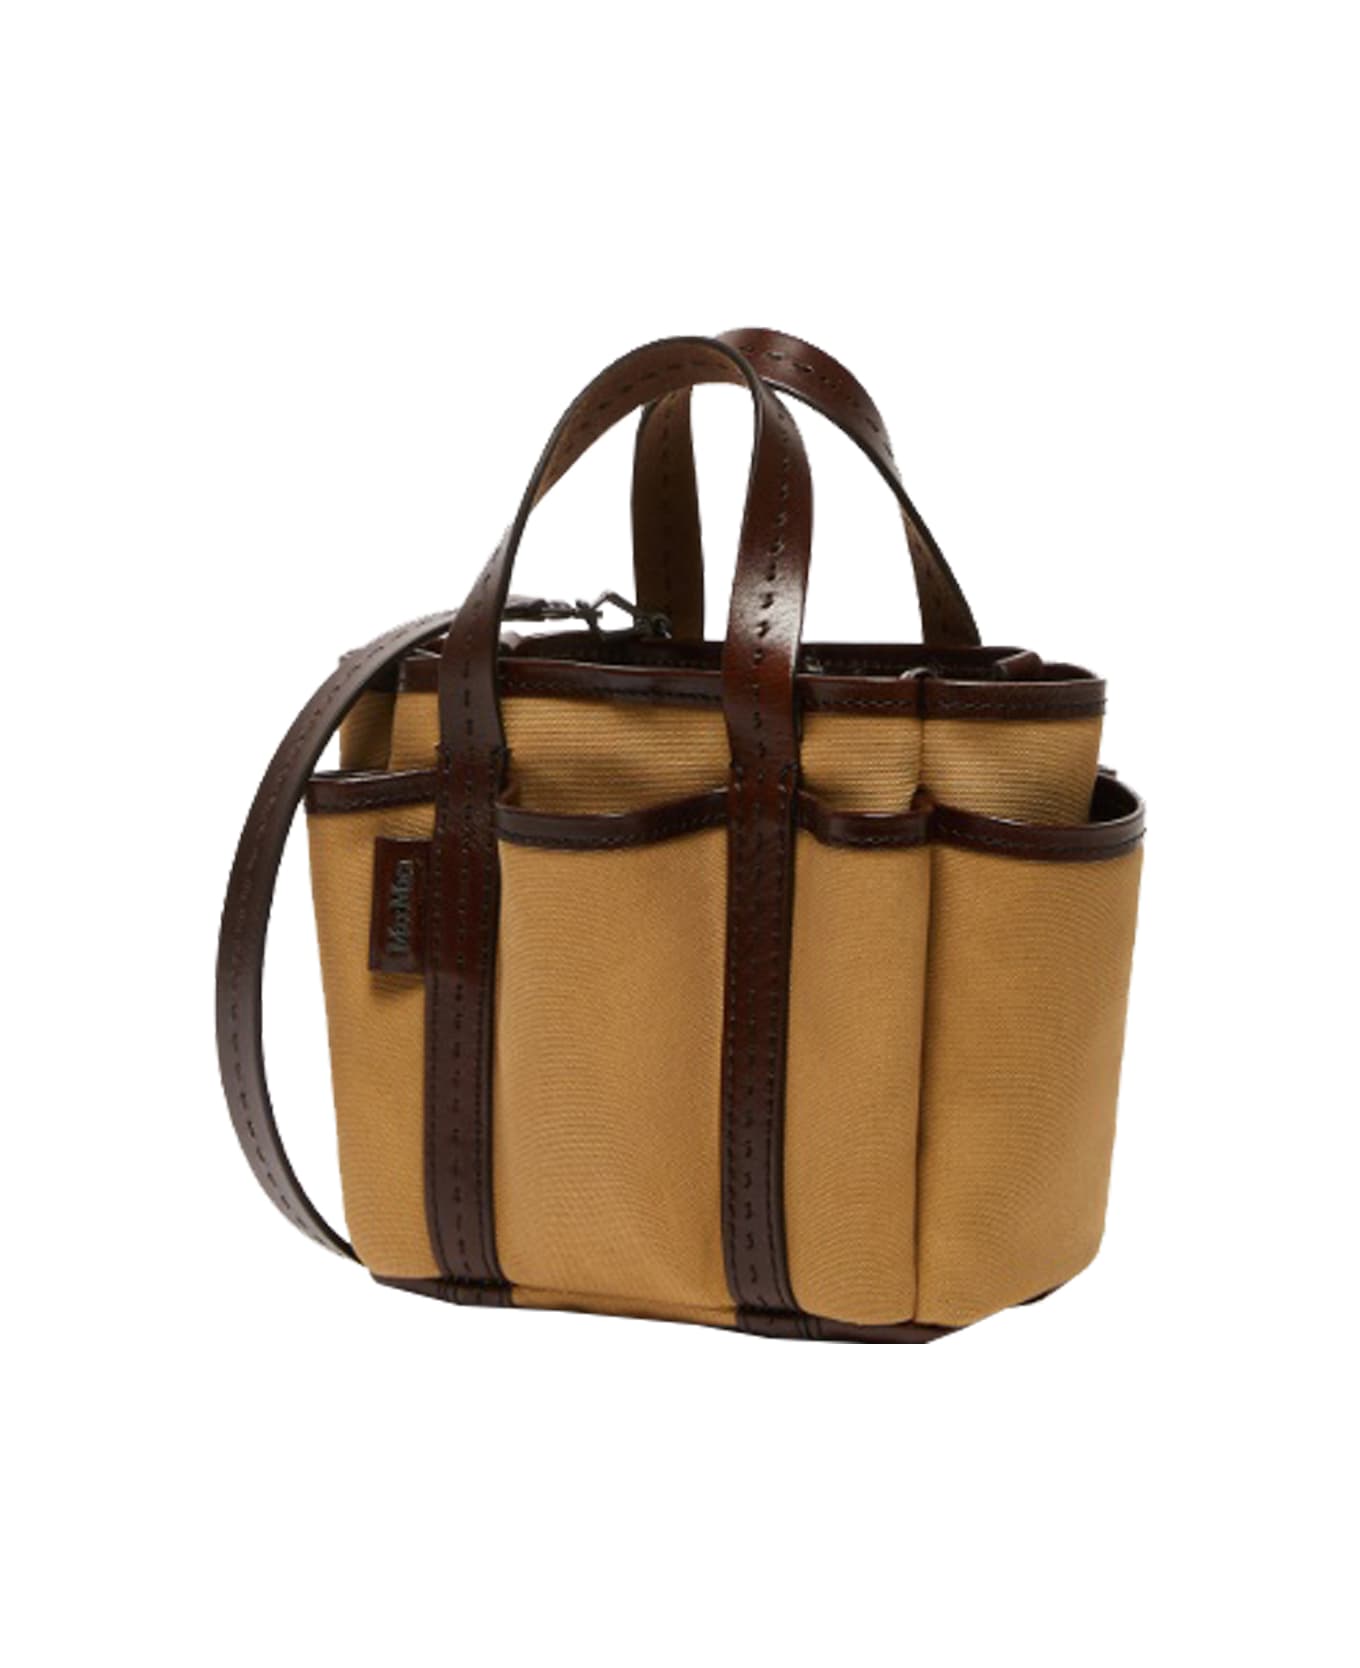 Max Mara ''gardencabasxs'' Shoulder Bag - Leather Brown